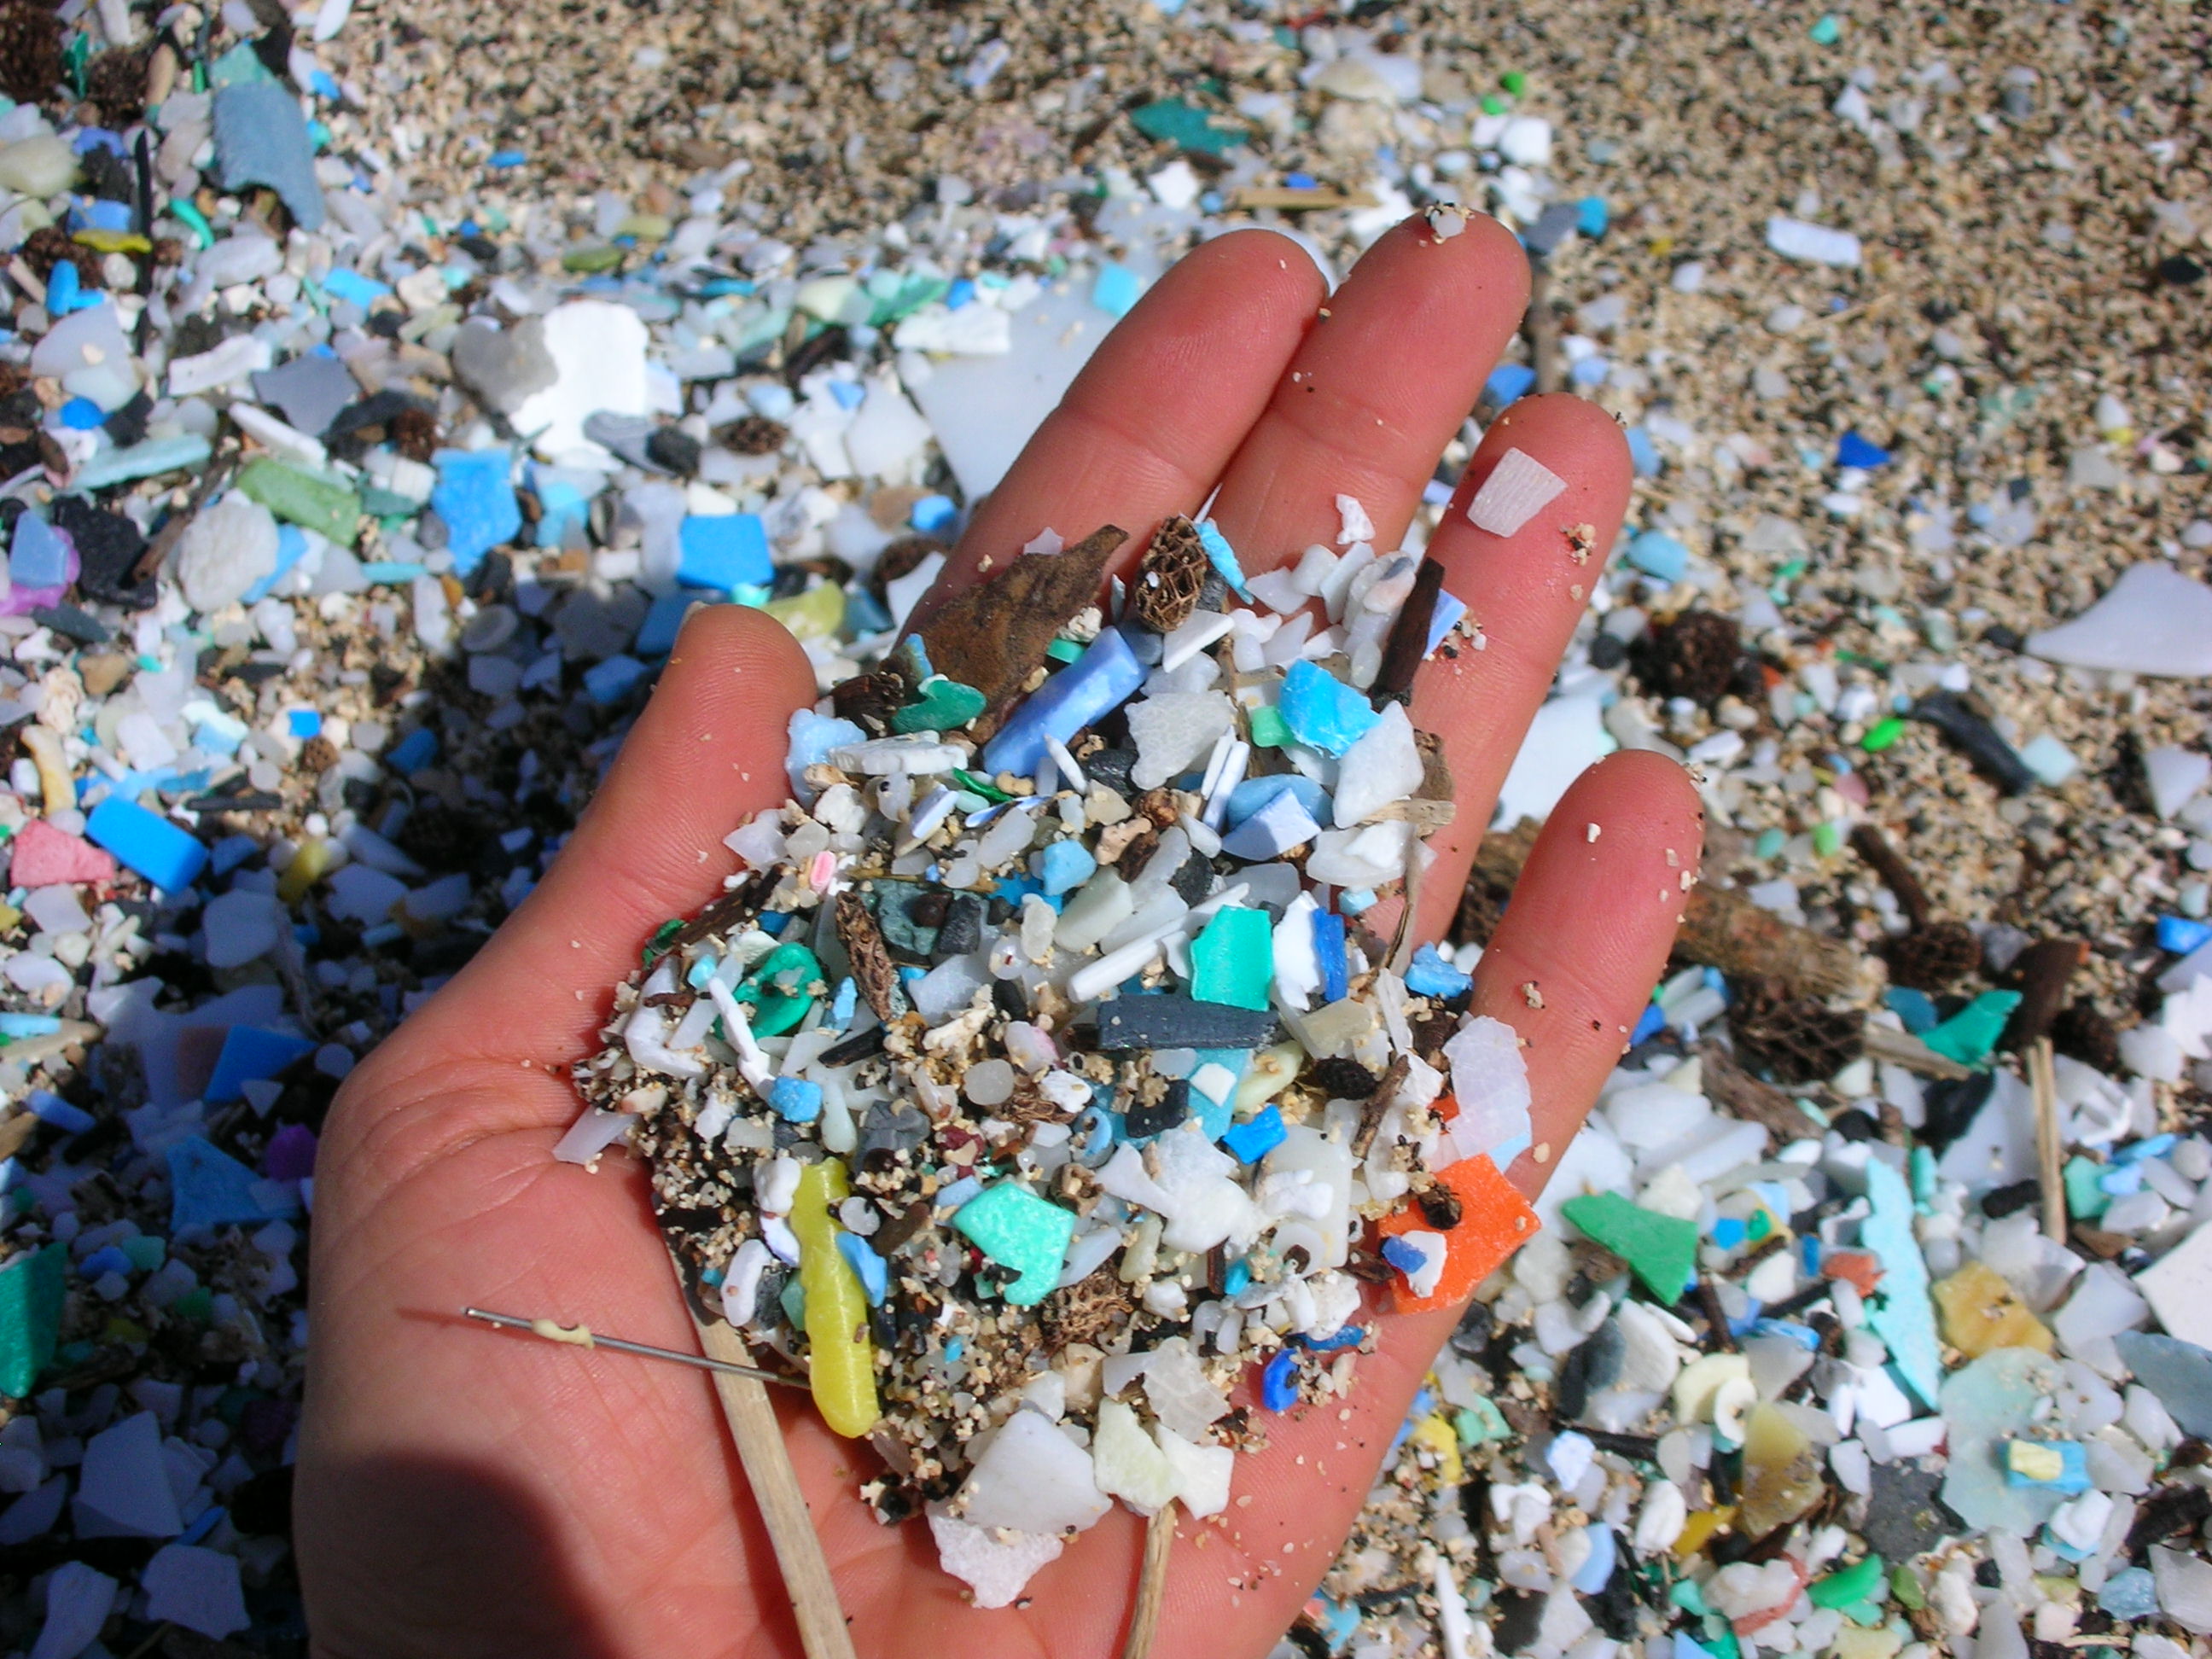 More information about "Microplastics: Η μαζική αόρατη απειλή των ωκεανών(Infographic)"